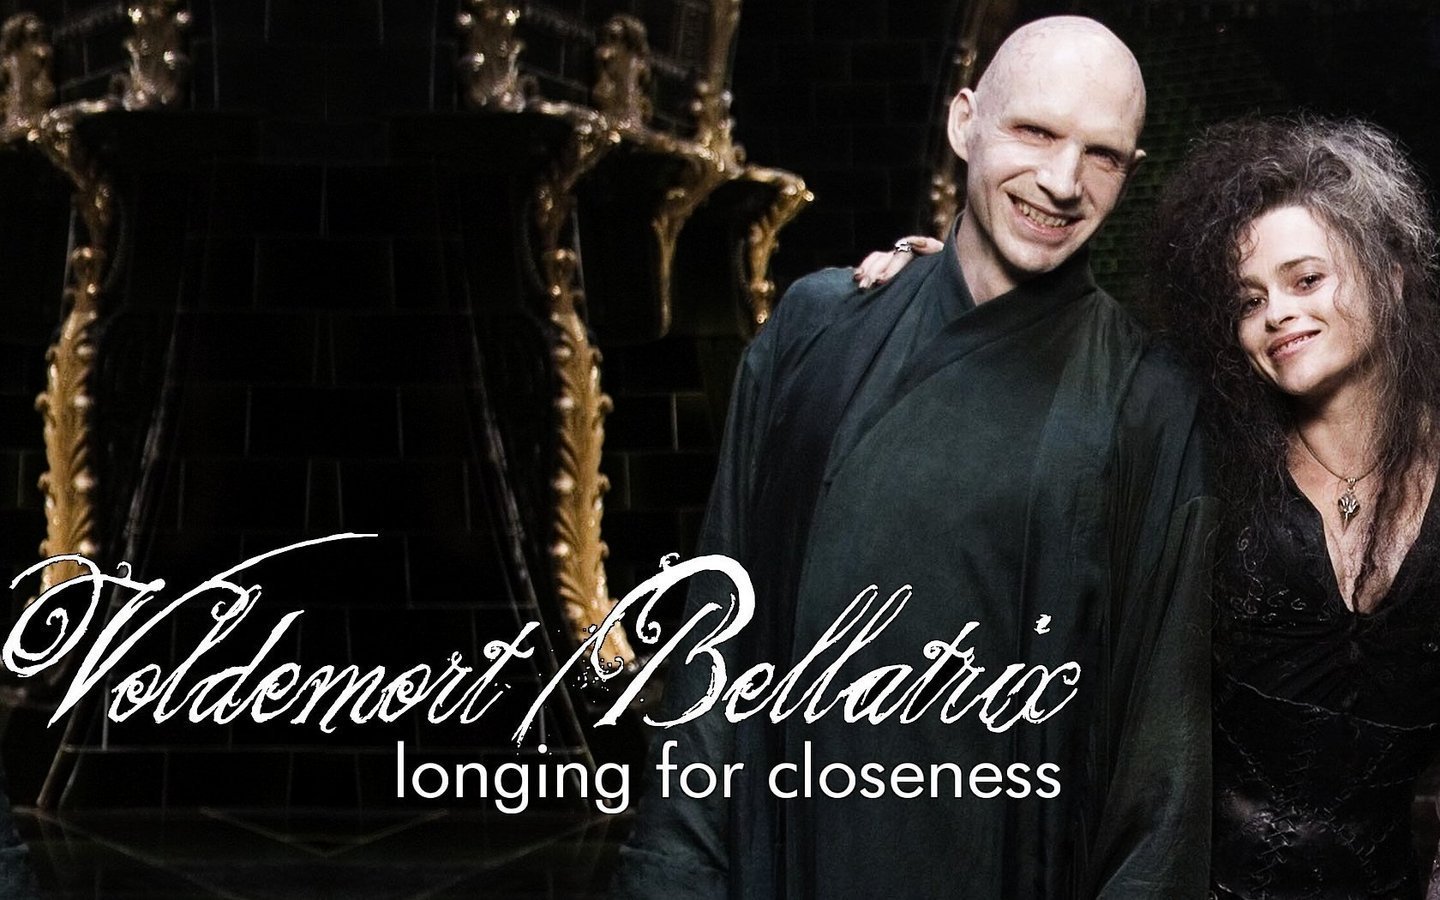 Bellatrix Lestrange Image HD Wallpaper And Background